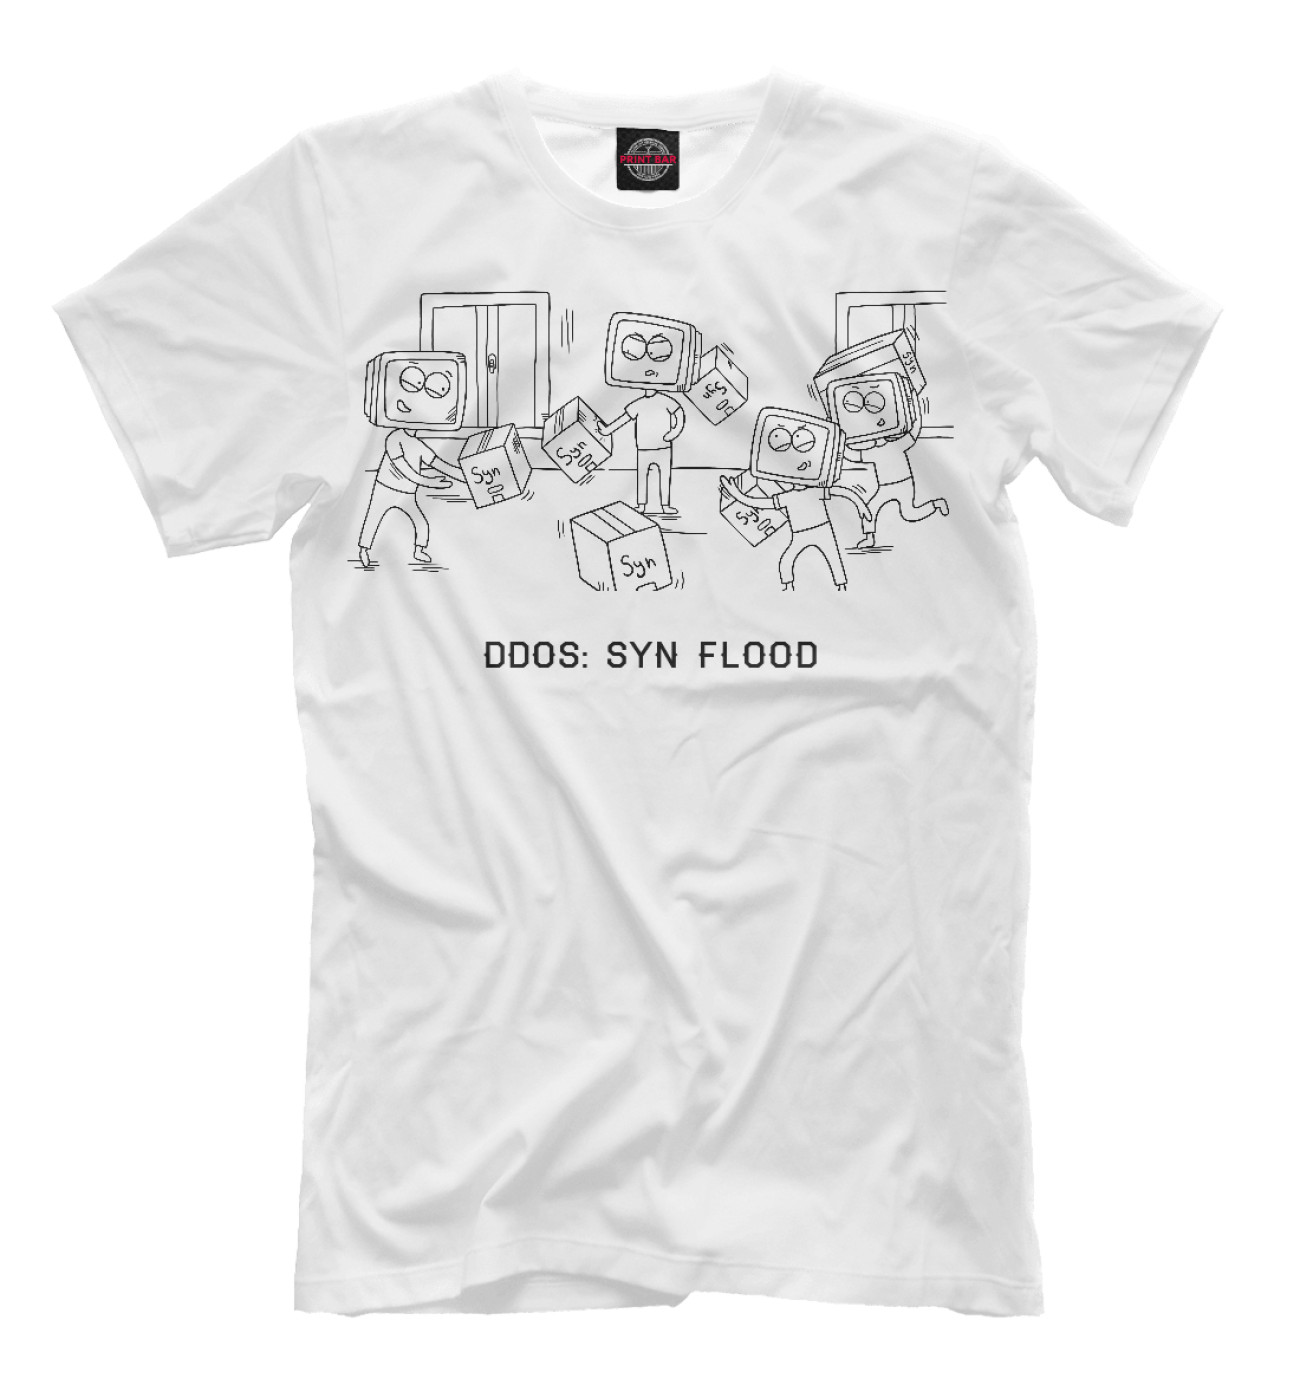 Мужская Футболка DDoS: SYN Flood, артикул: ITT-997588-fut-2